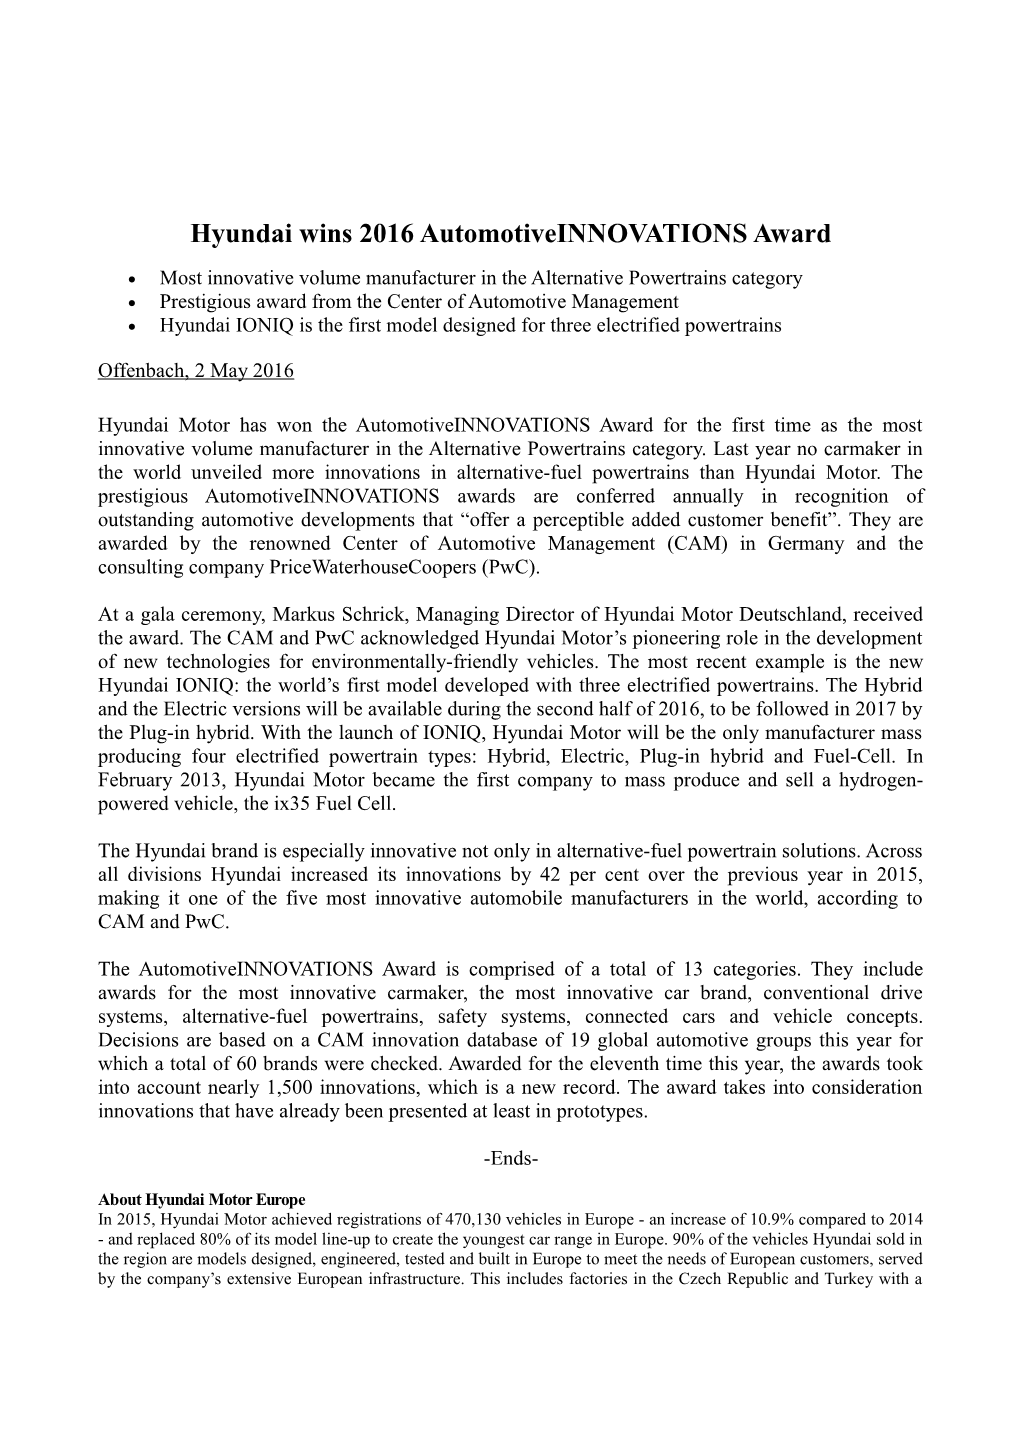 Hyundai Wins 2016 Automotiveinnovations Award